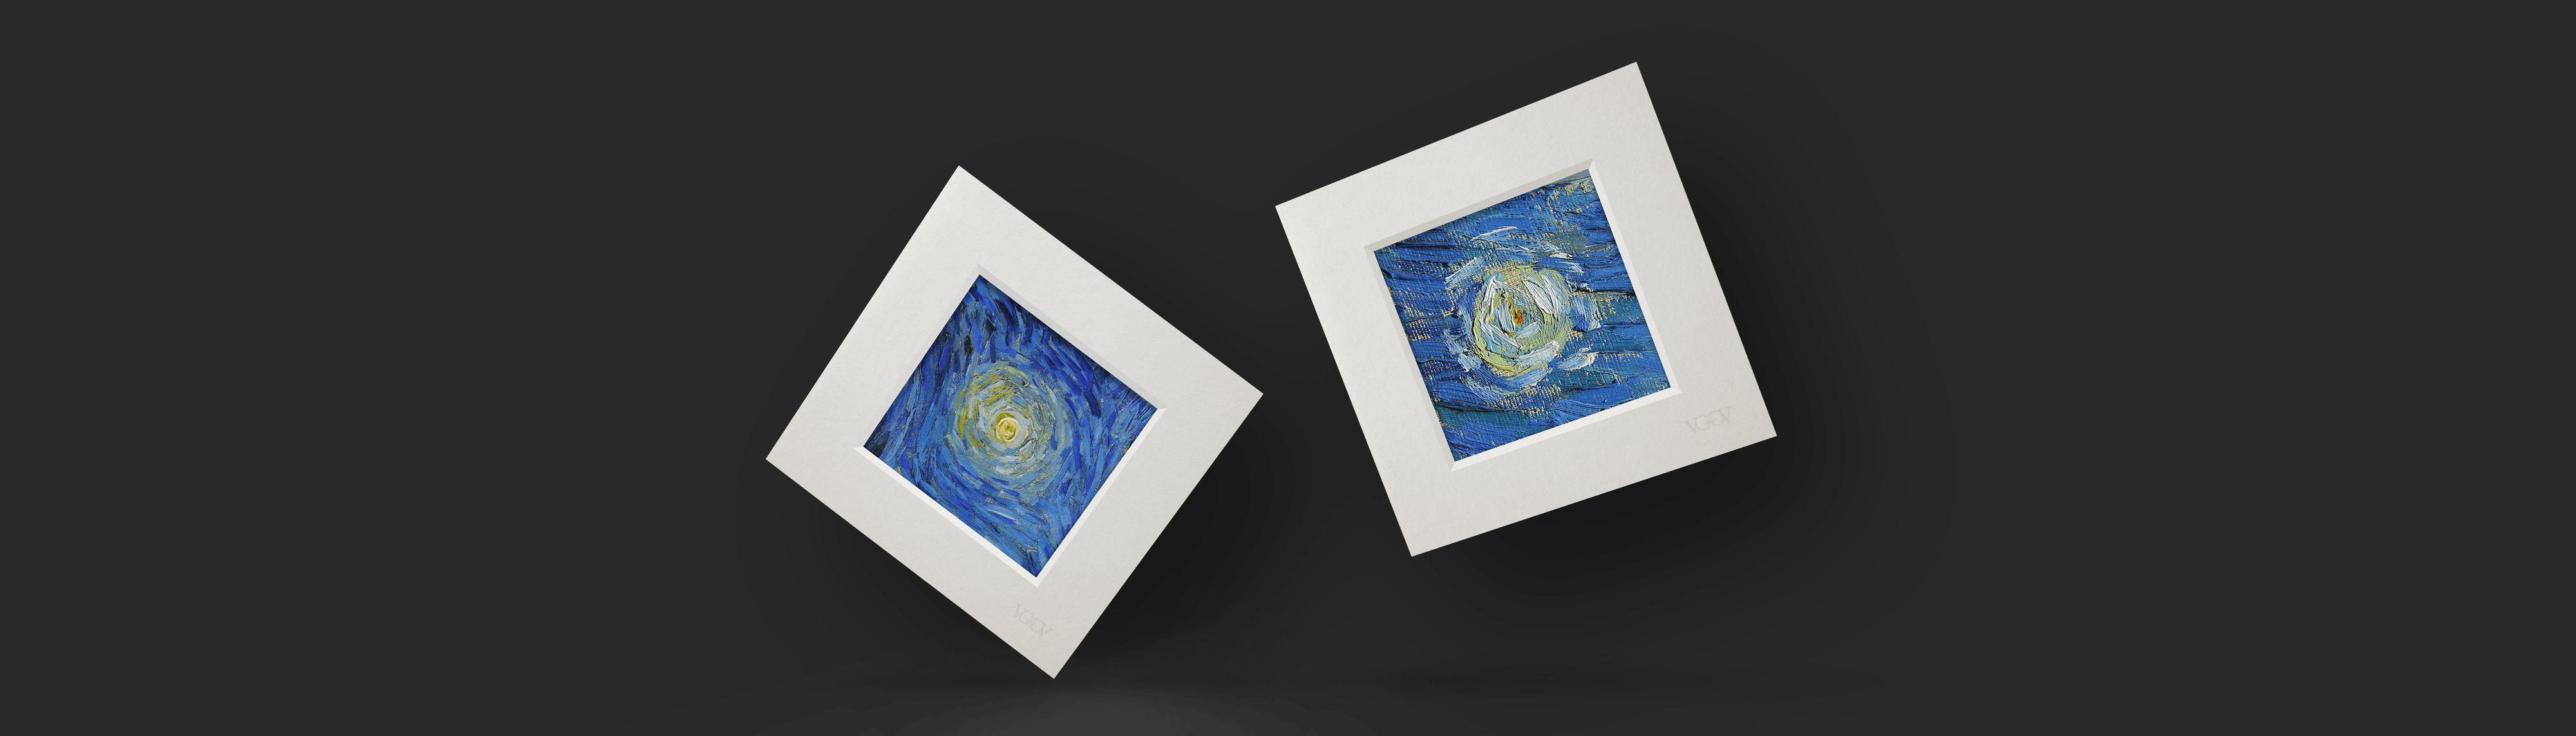 Van Gogh's Stars